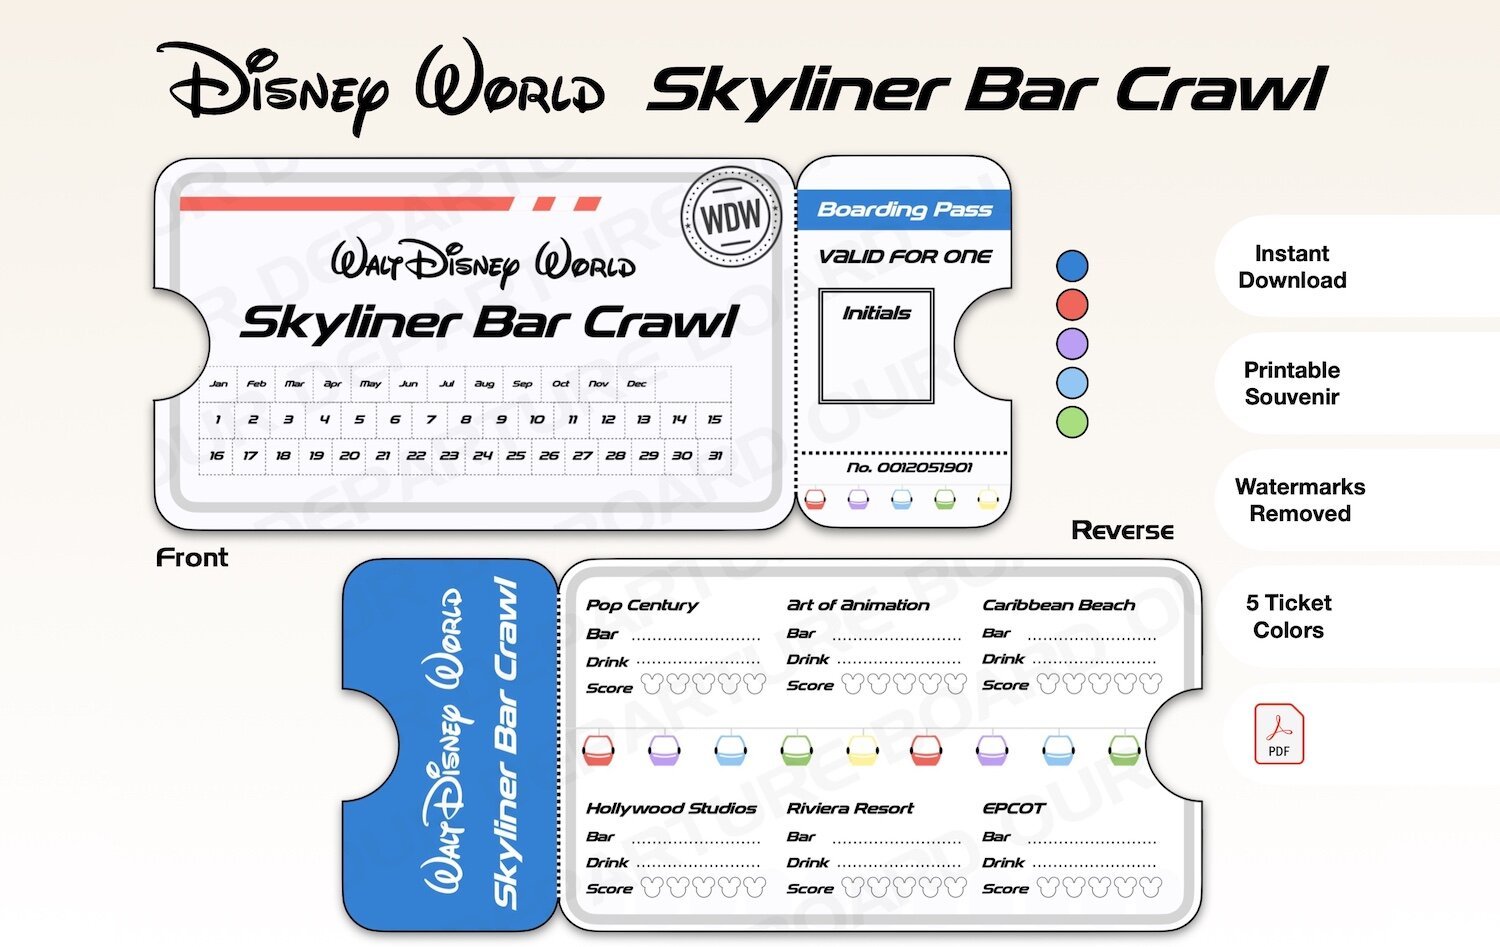 Disney World Skyliner Bar Crawl - $6.99